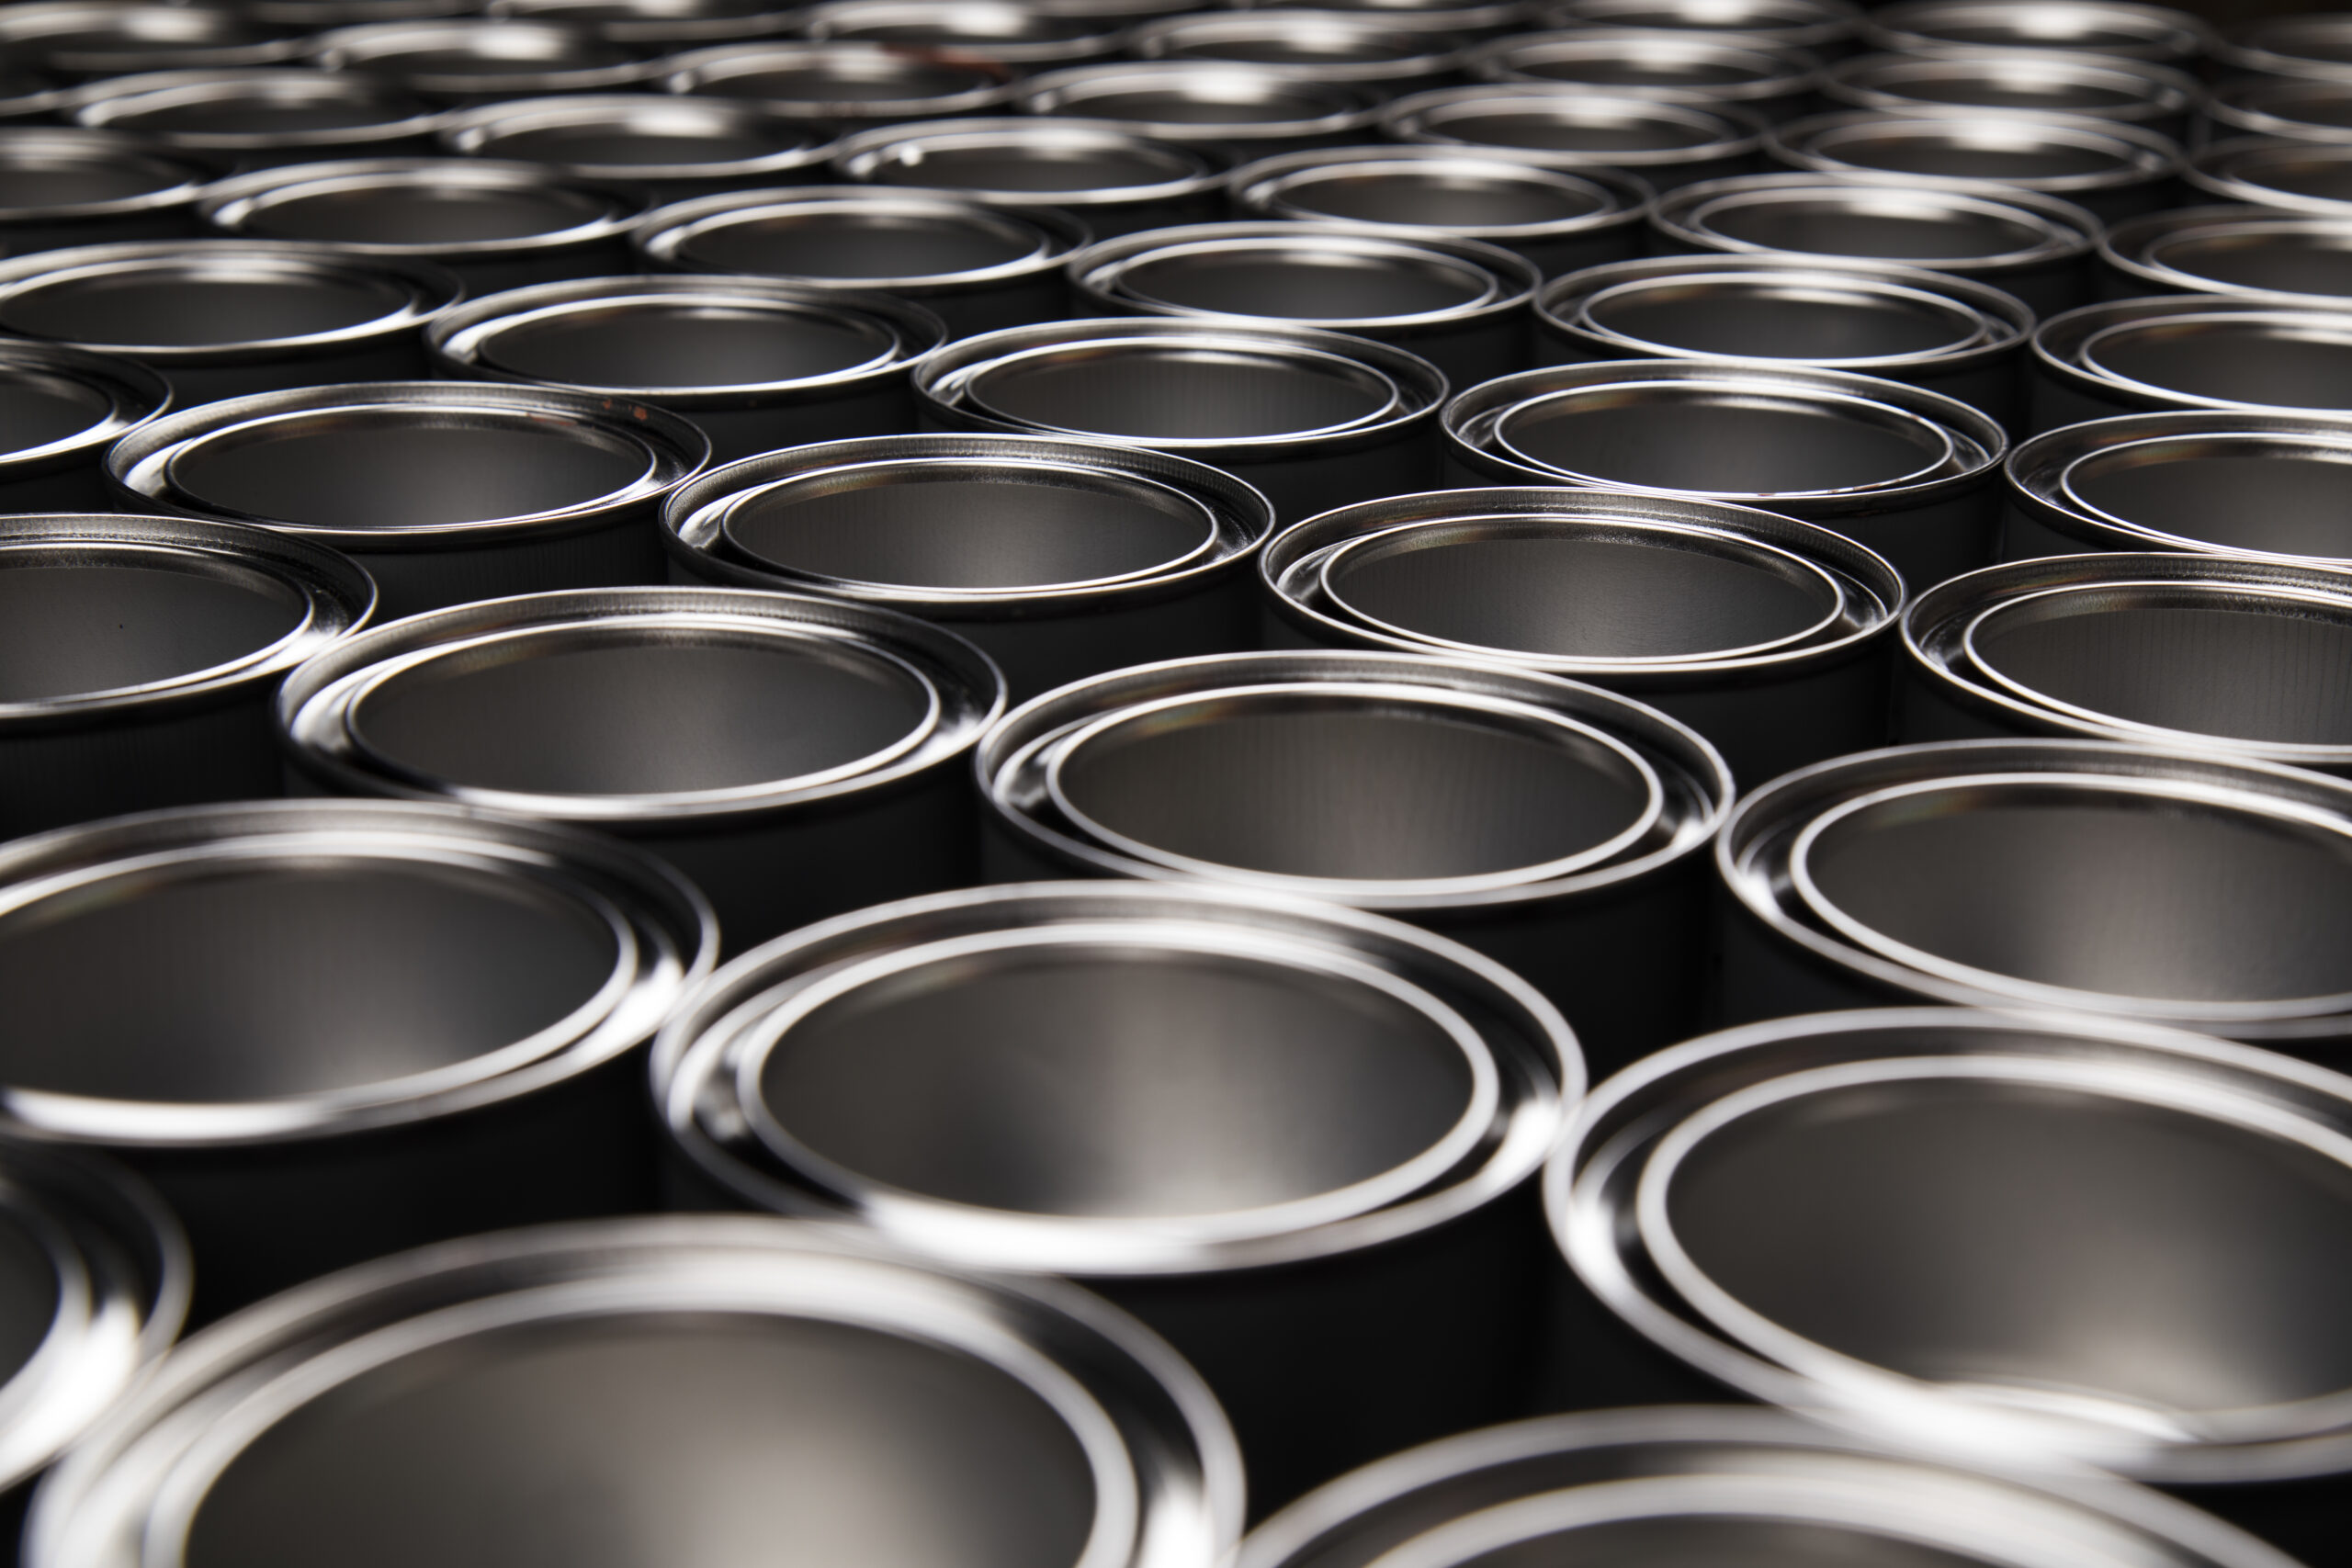 Metal tin paint cans